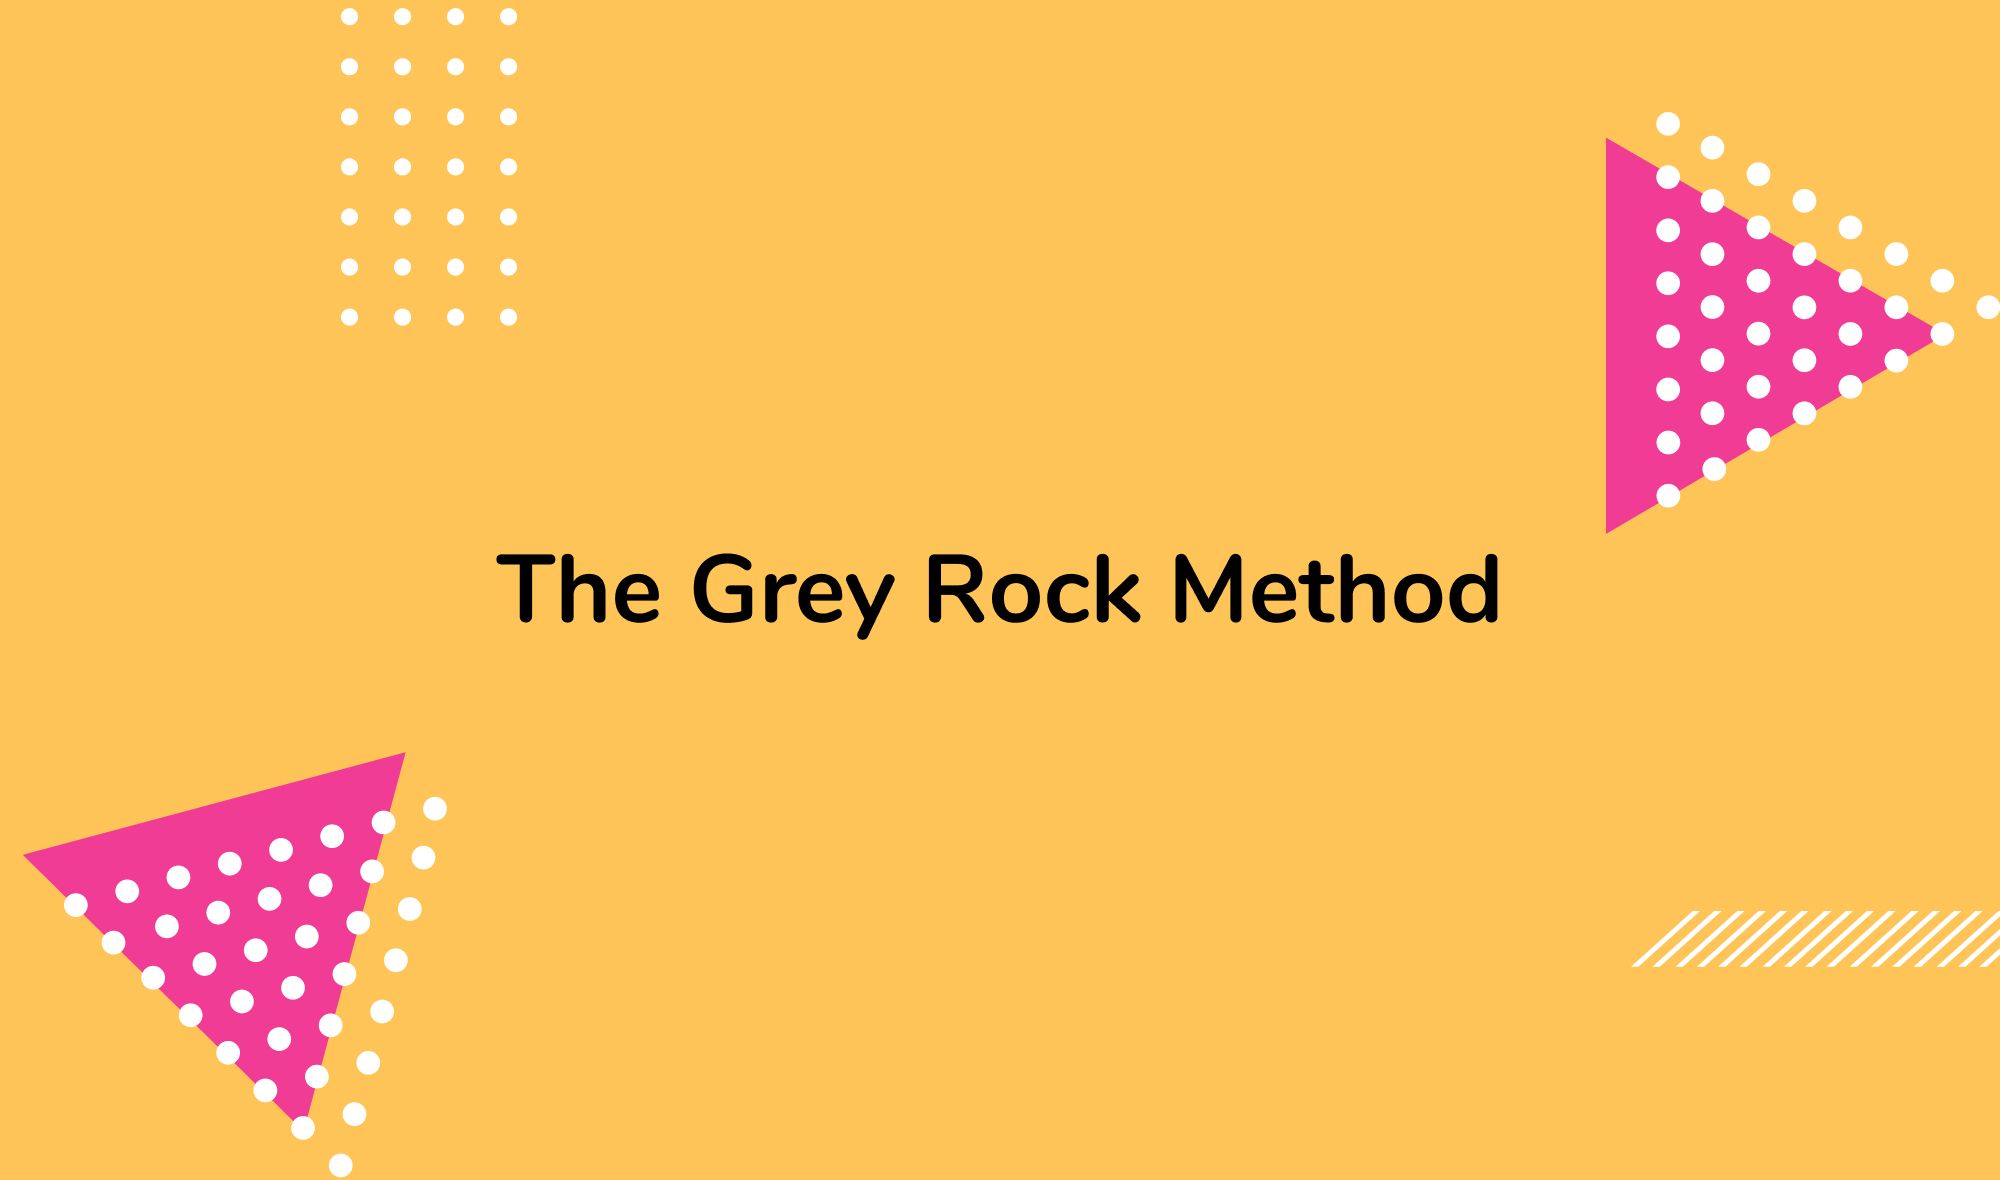 The Grey Rock Method: An Effective Technique